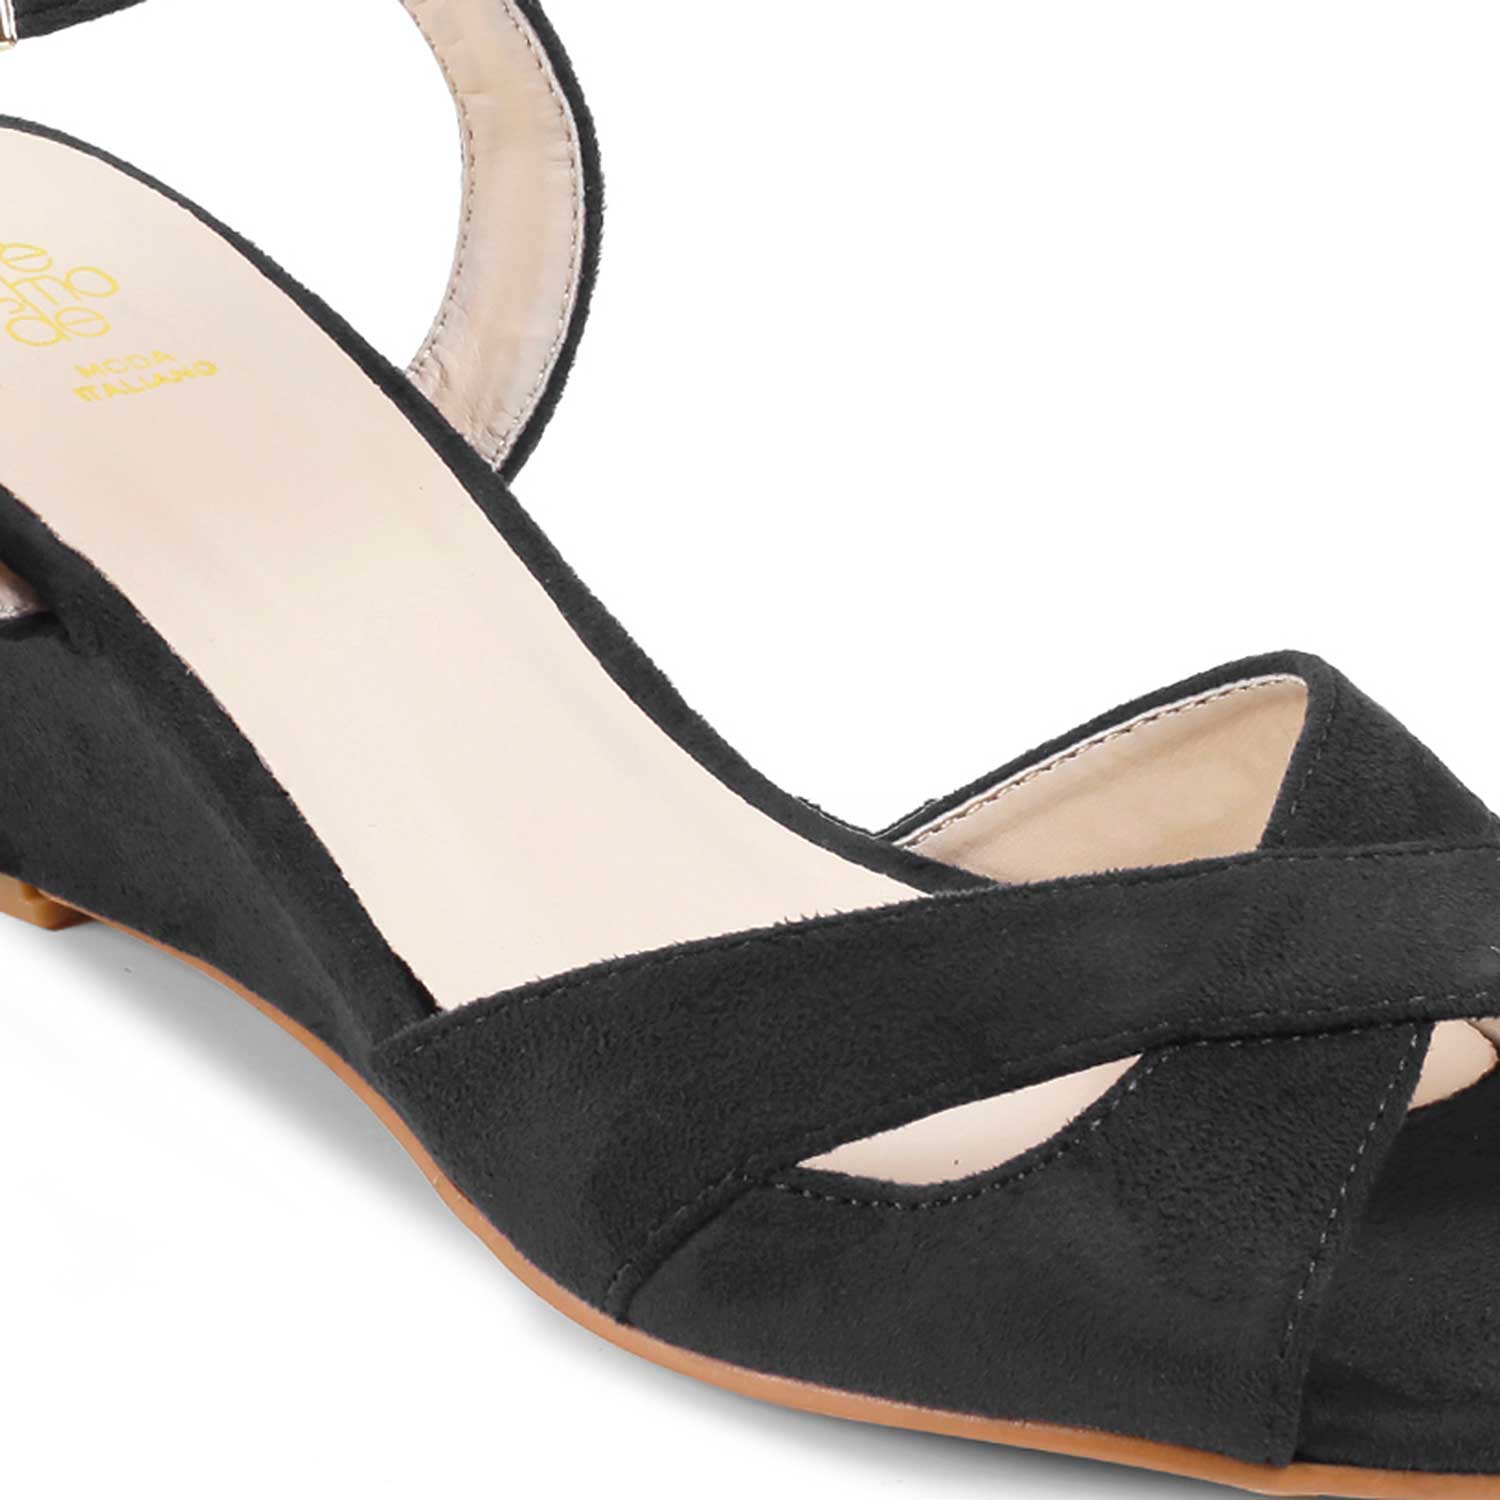 Hillary New Black Women's Dress Heel Sandals Online at Tresmode